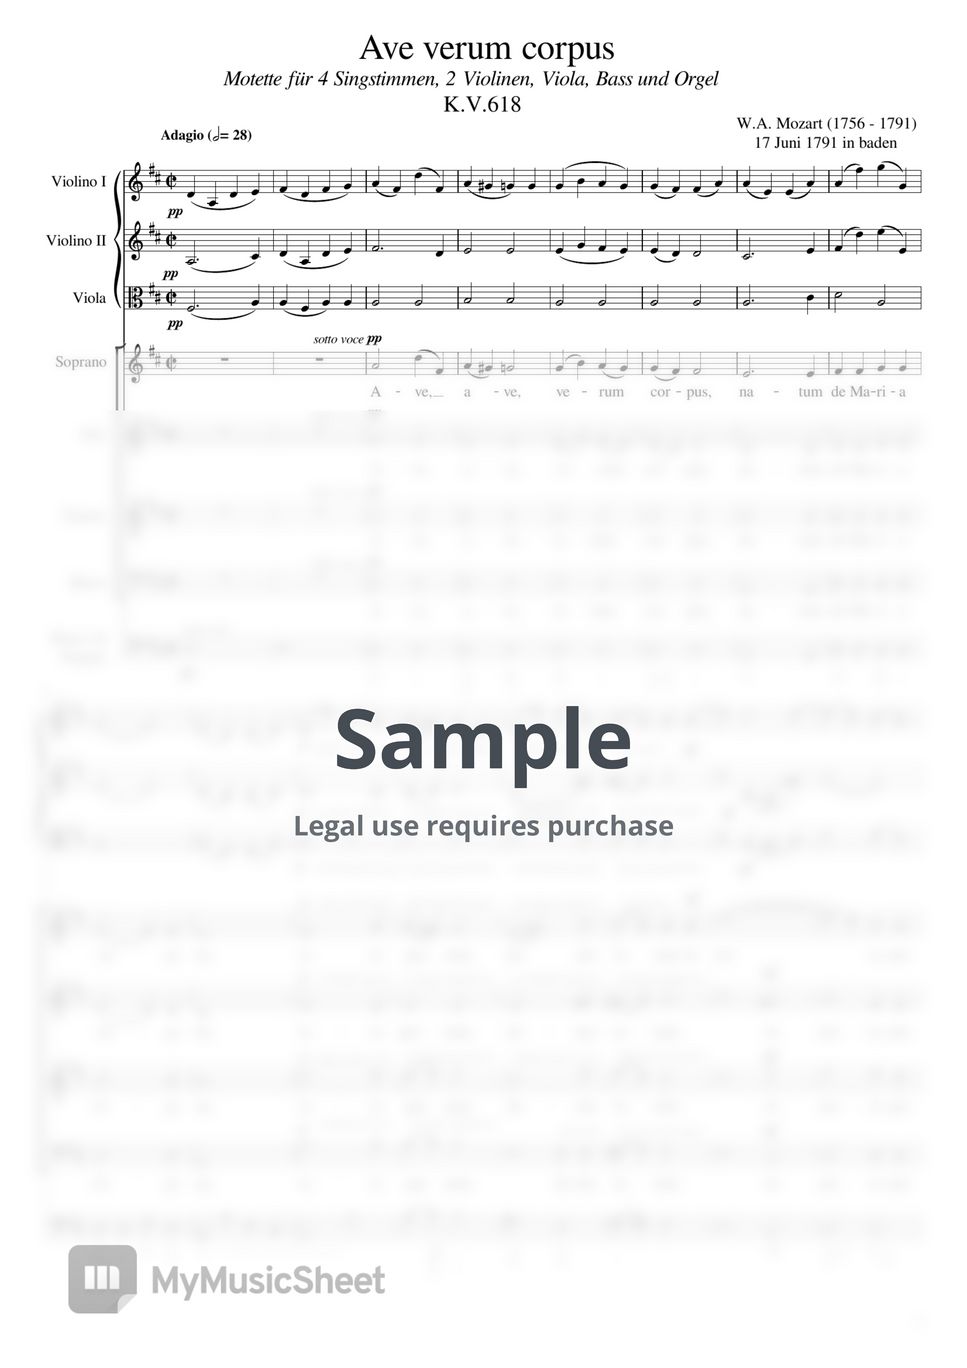 莫扎特 - Ave verum corpus, K.618 (Mozart - Ave verum corpus, K.618 - Strings and SATB Original - Score and Parts) by poon